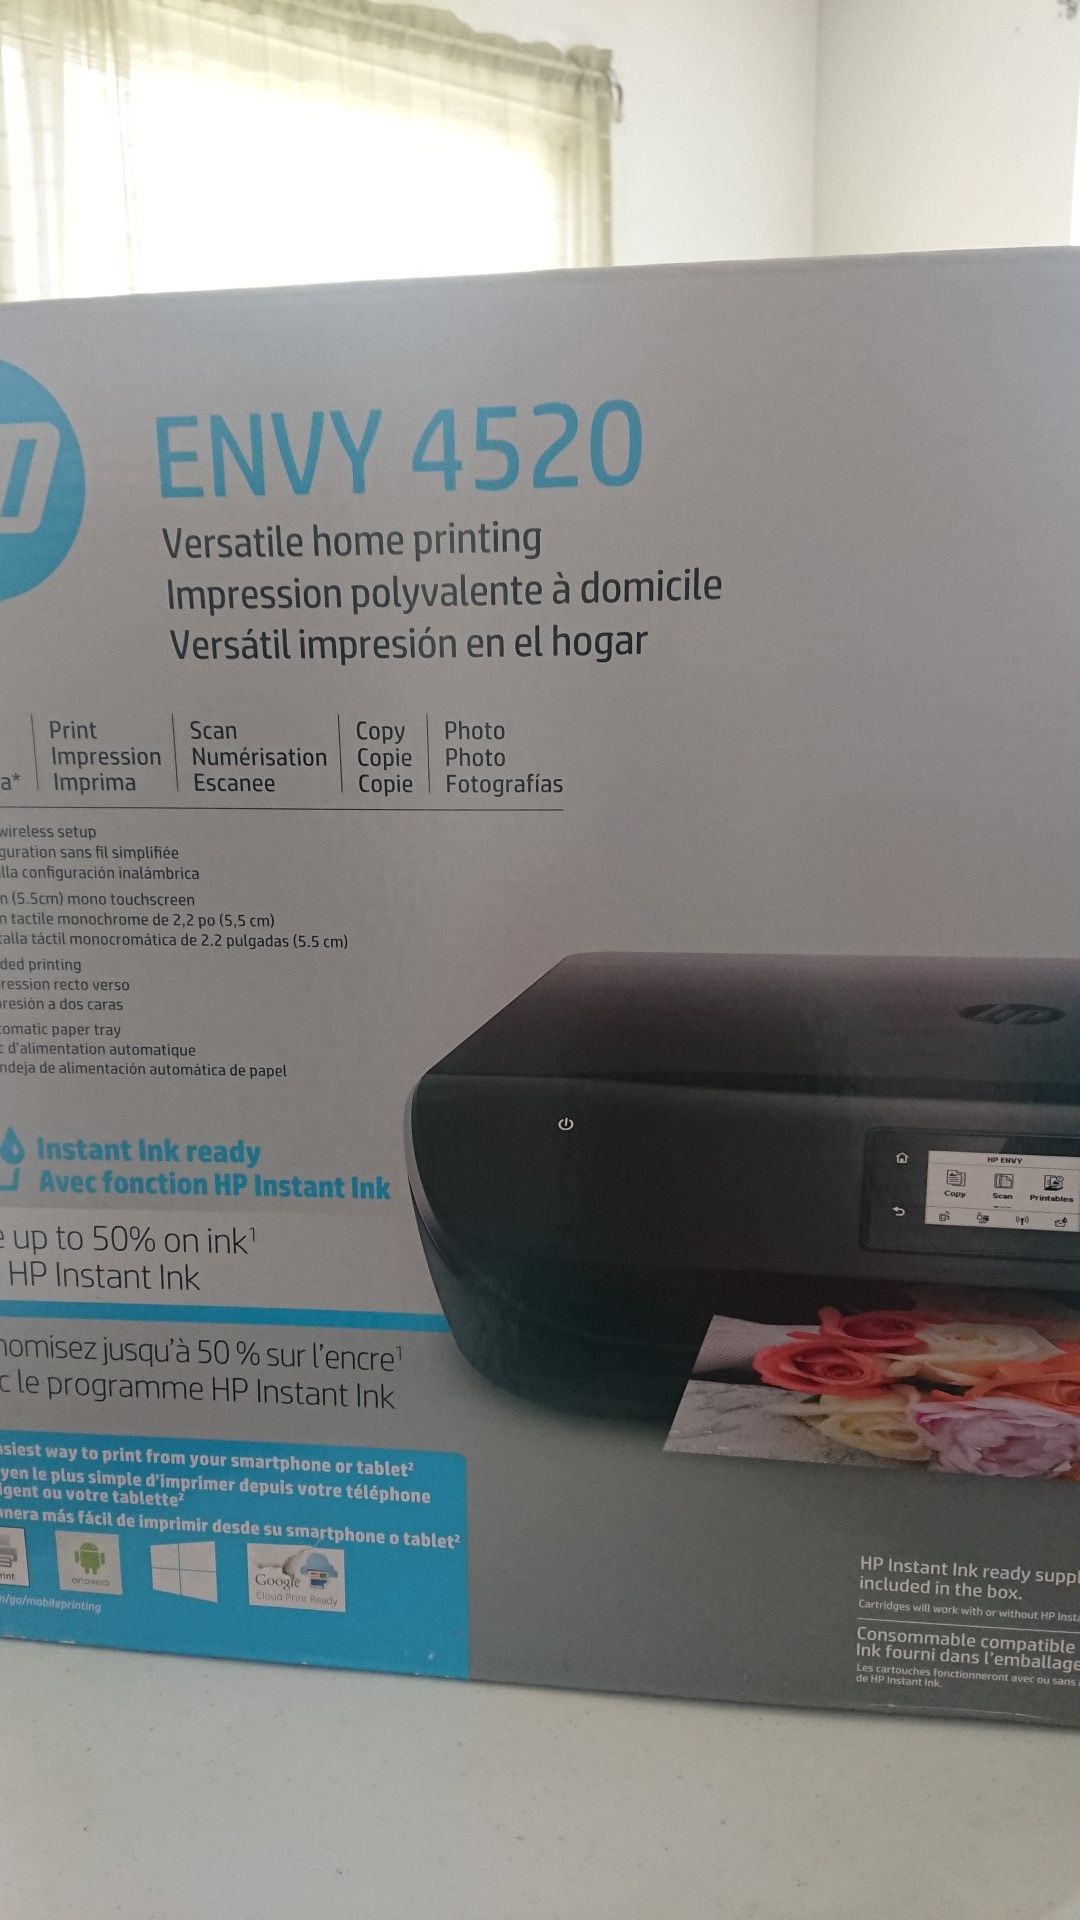 Brand new hp envy 4520 versatile printer